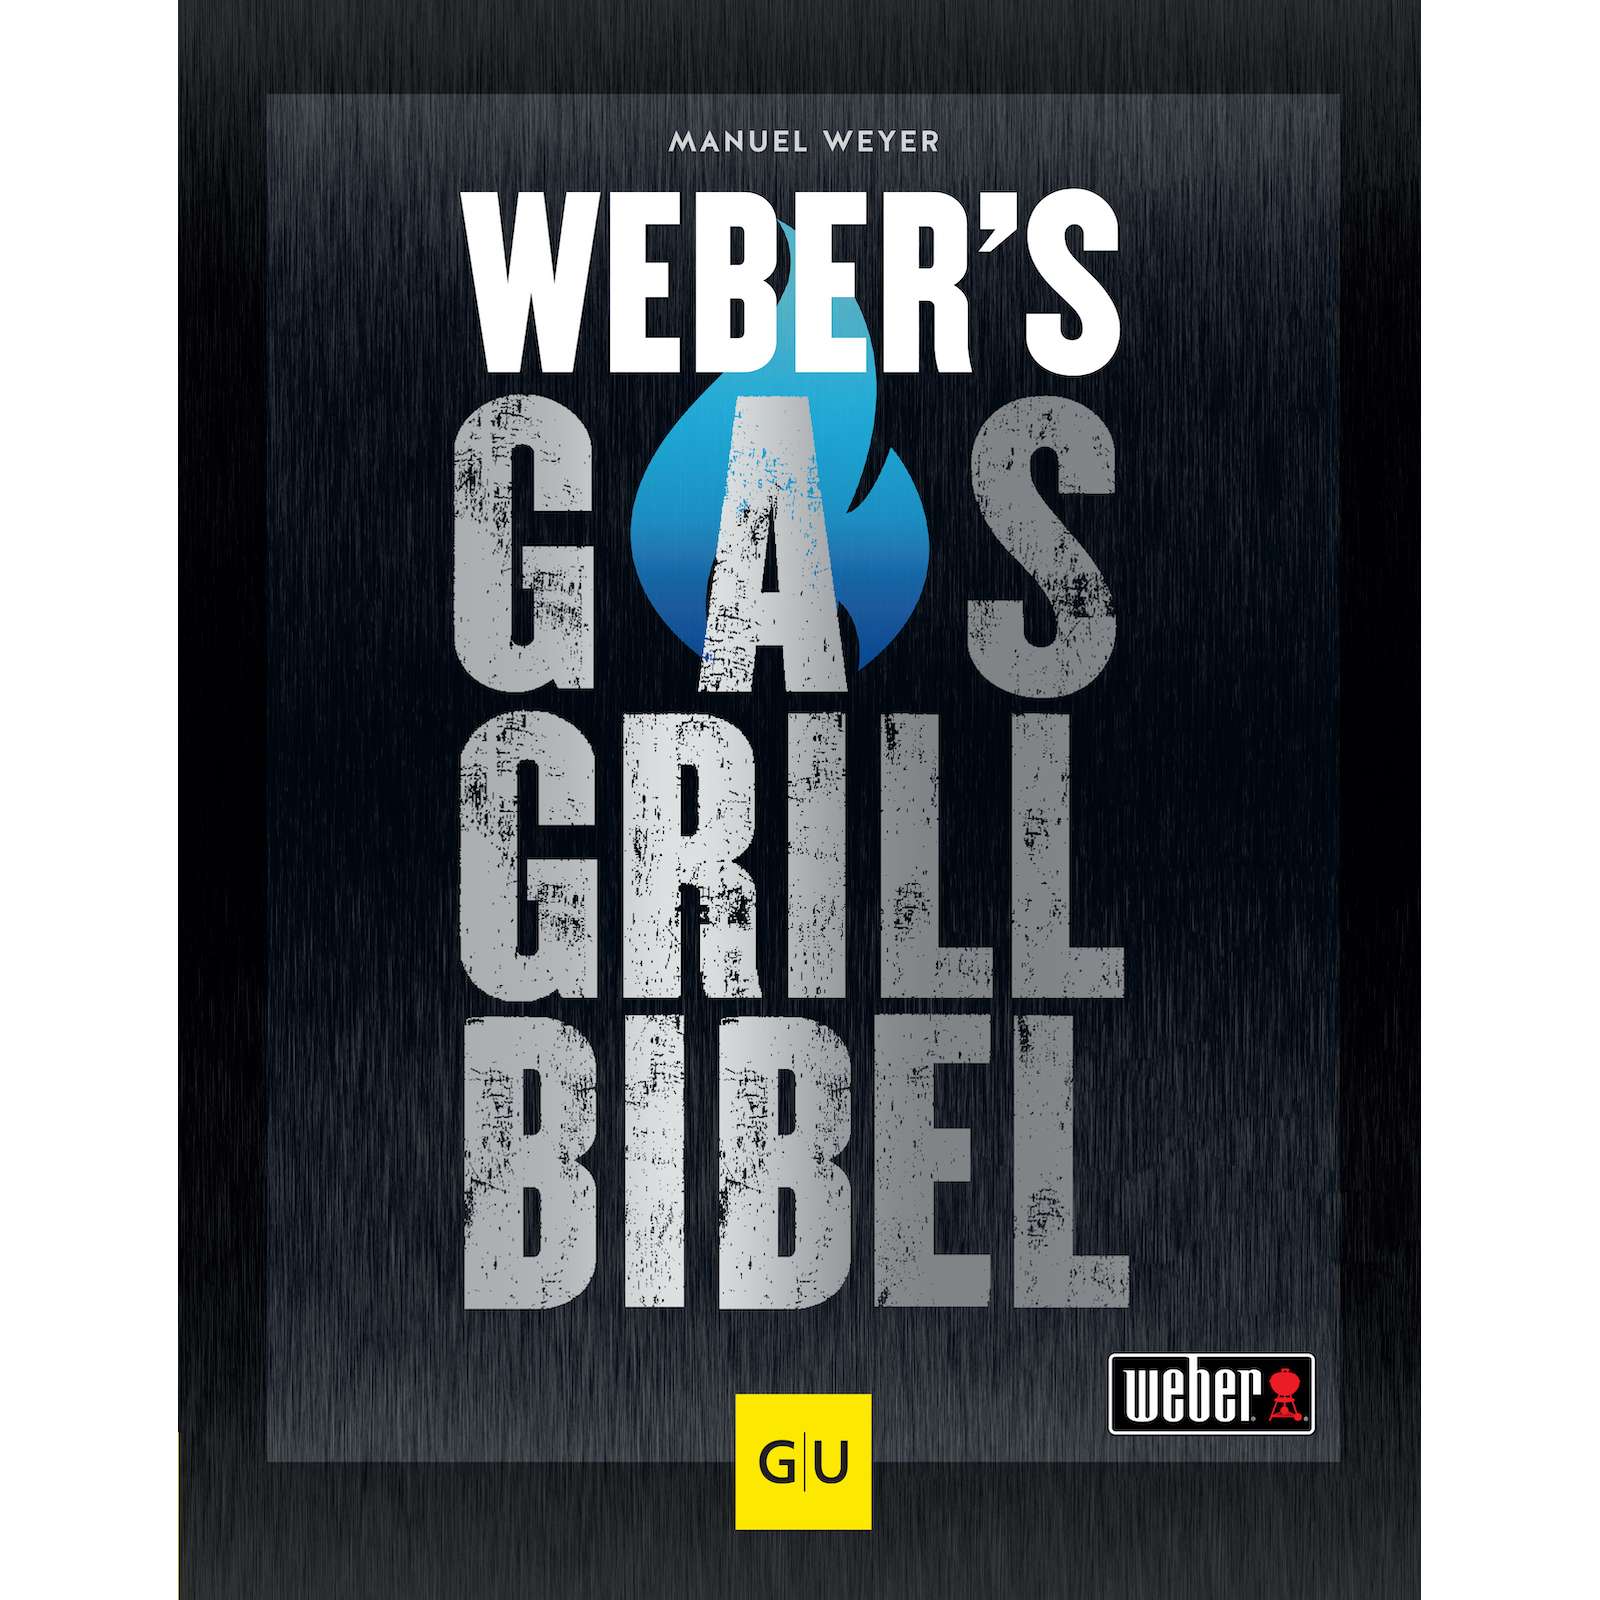 Weber's Gasgrillbibel Grillbuch gebundene Ausgabe 360 Seiten